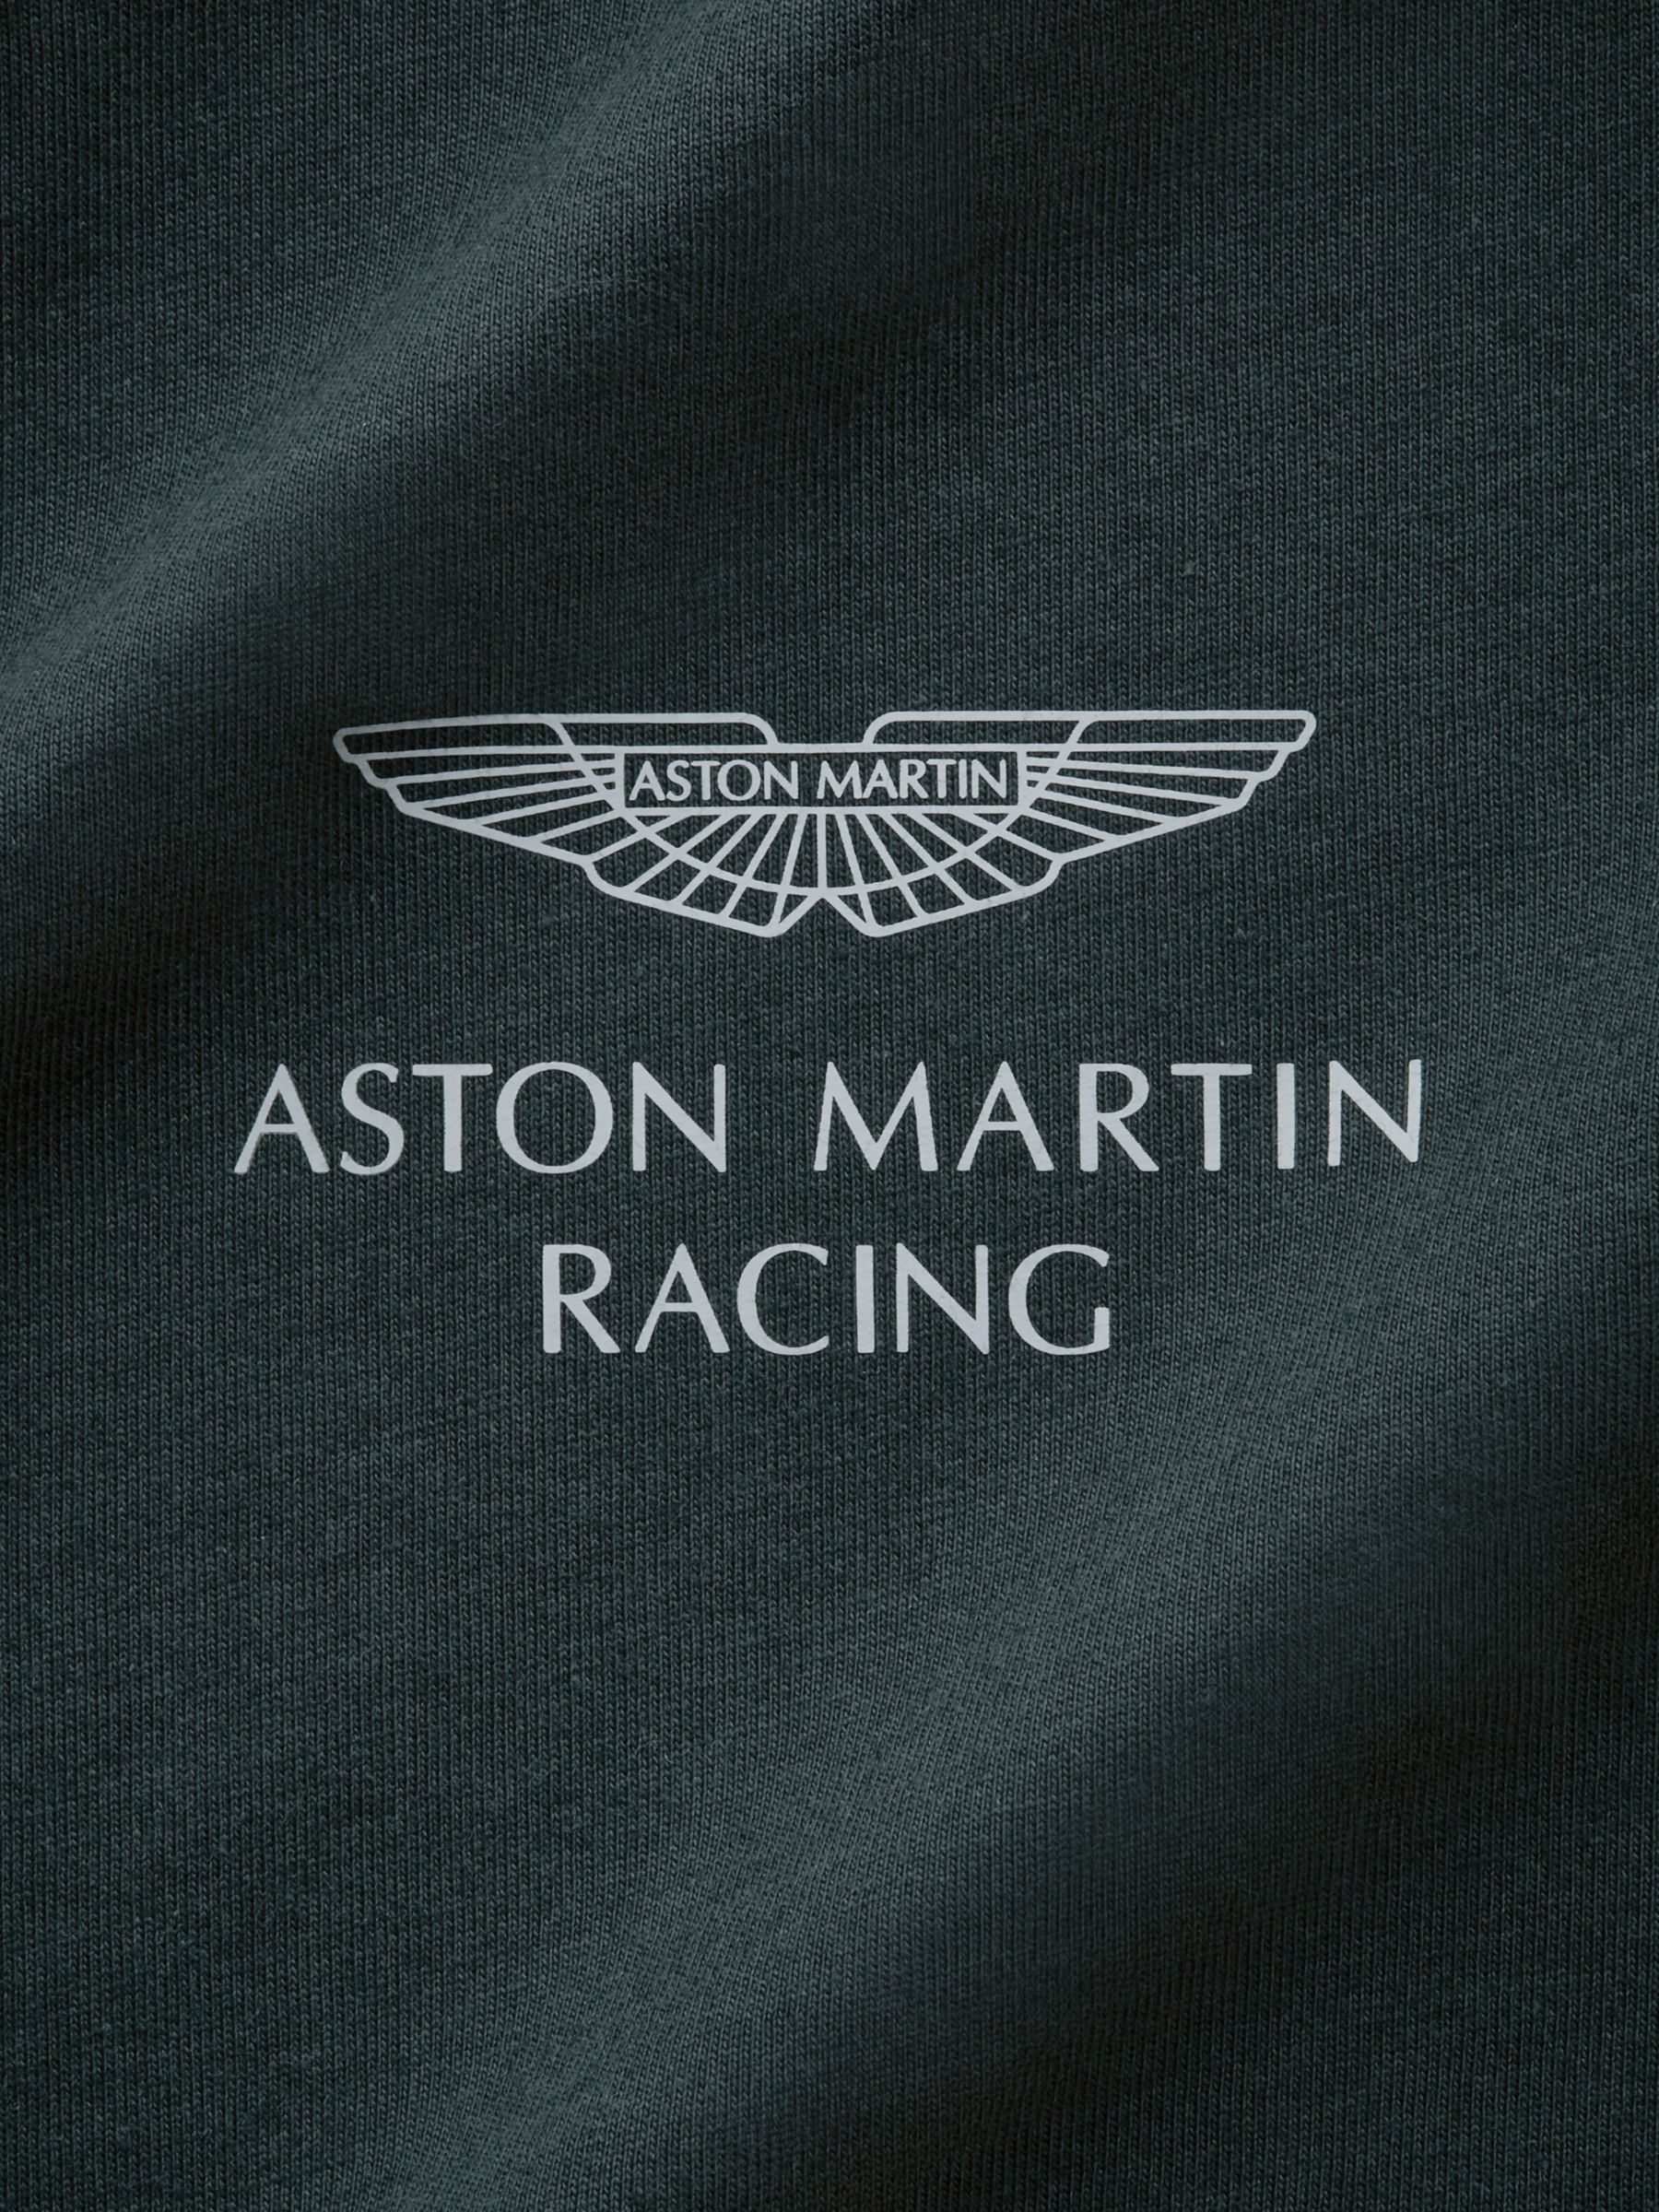 aston martin t shirts india online